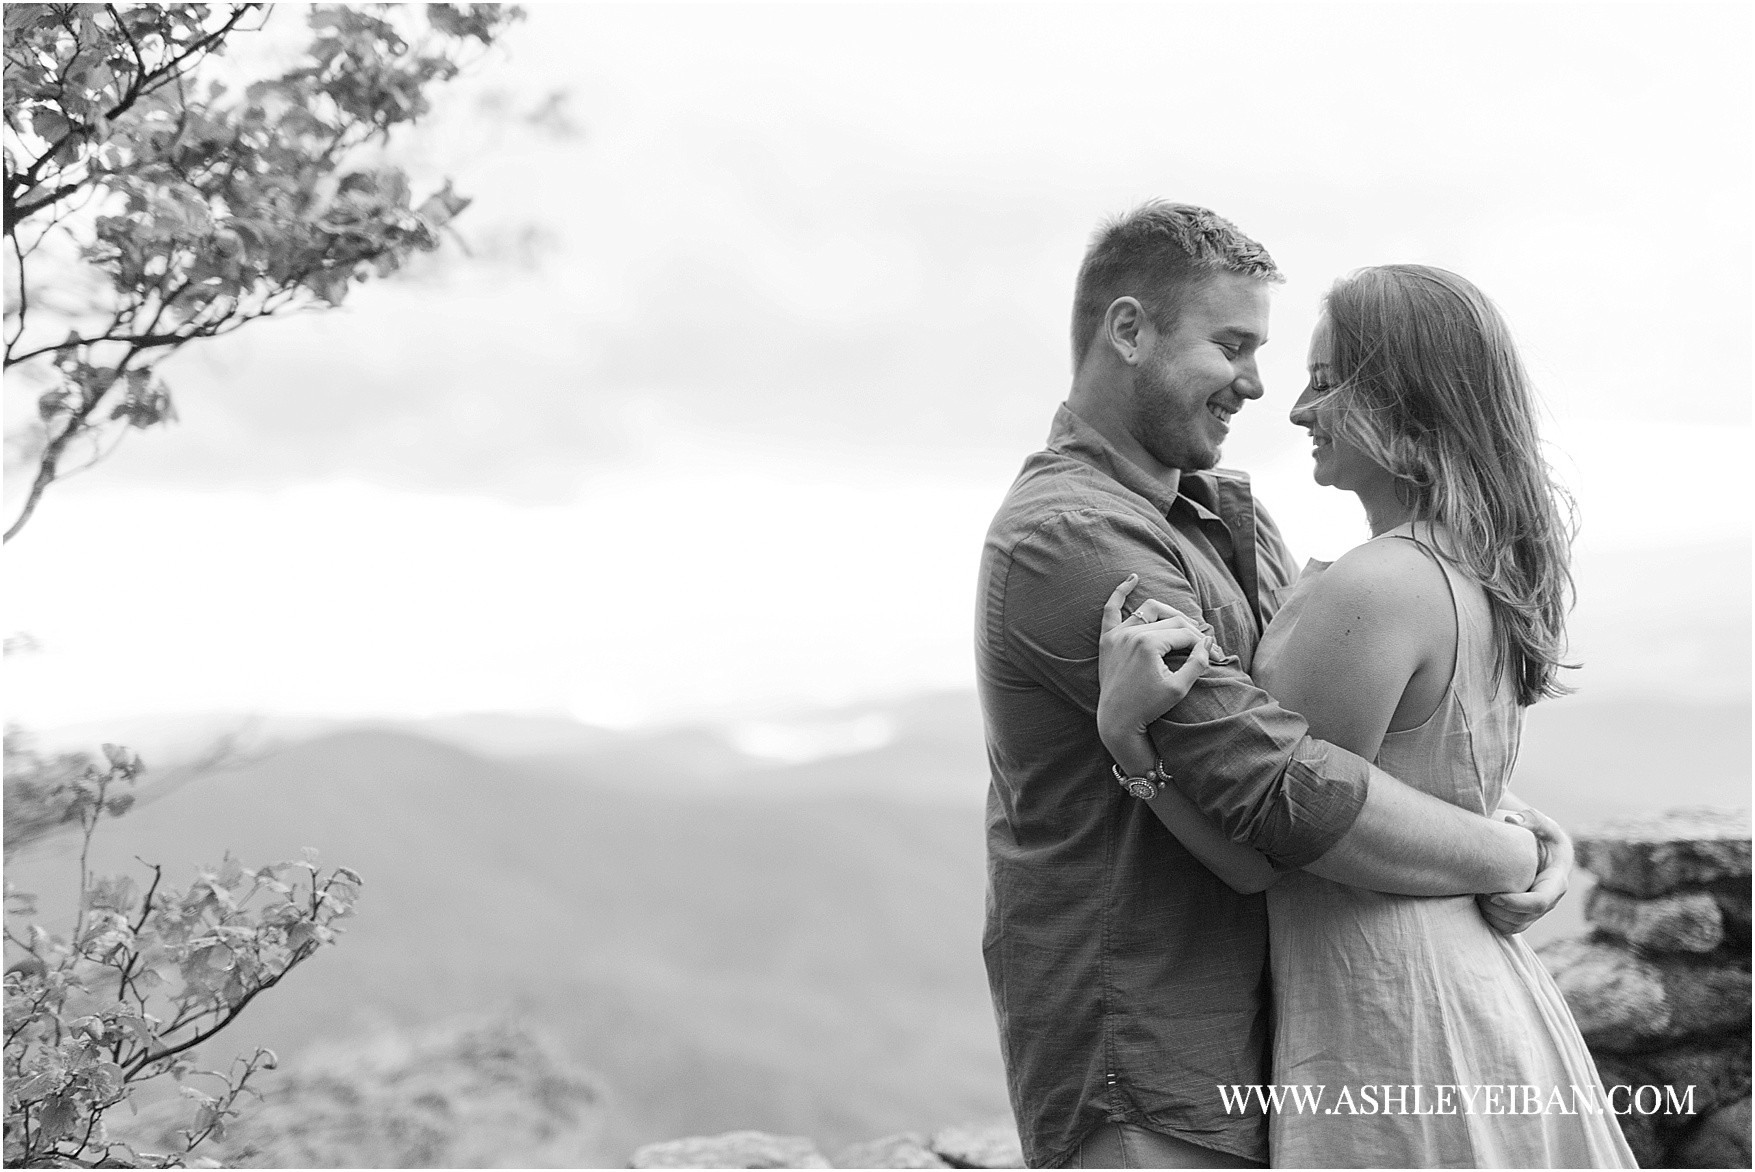 Mountaintop Engagement Session || Lynchburg Wedding and Engagement Photographer || www.ashleyeiban.com